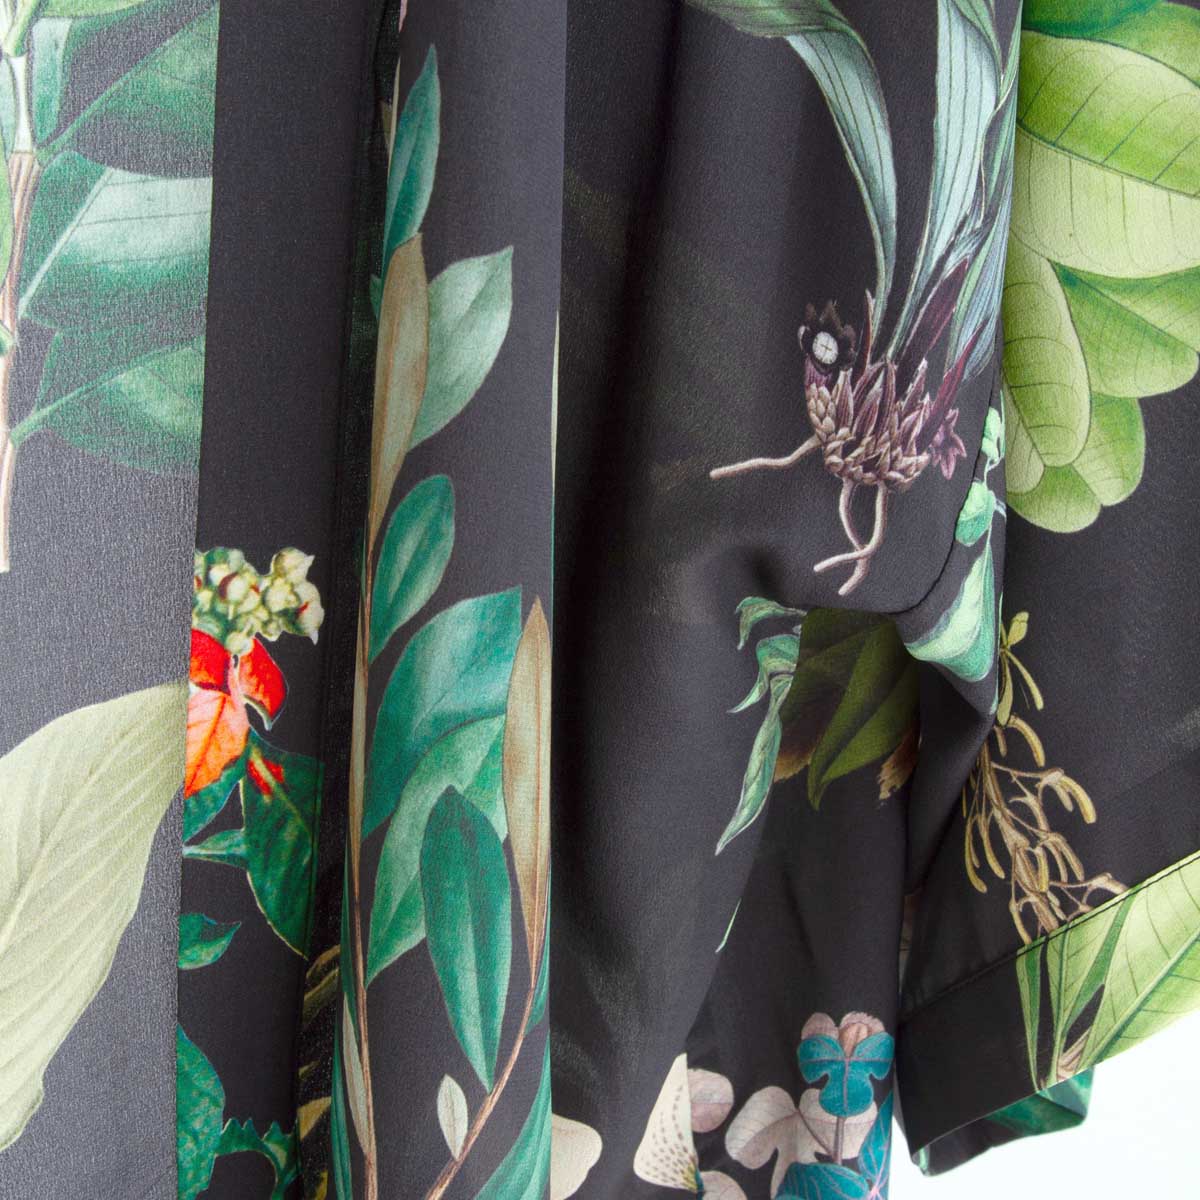 The Artists Label 'Ancient Botany' Silk Kimono